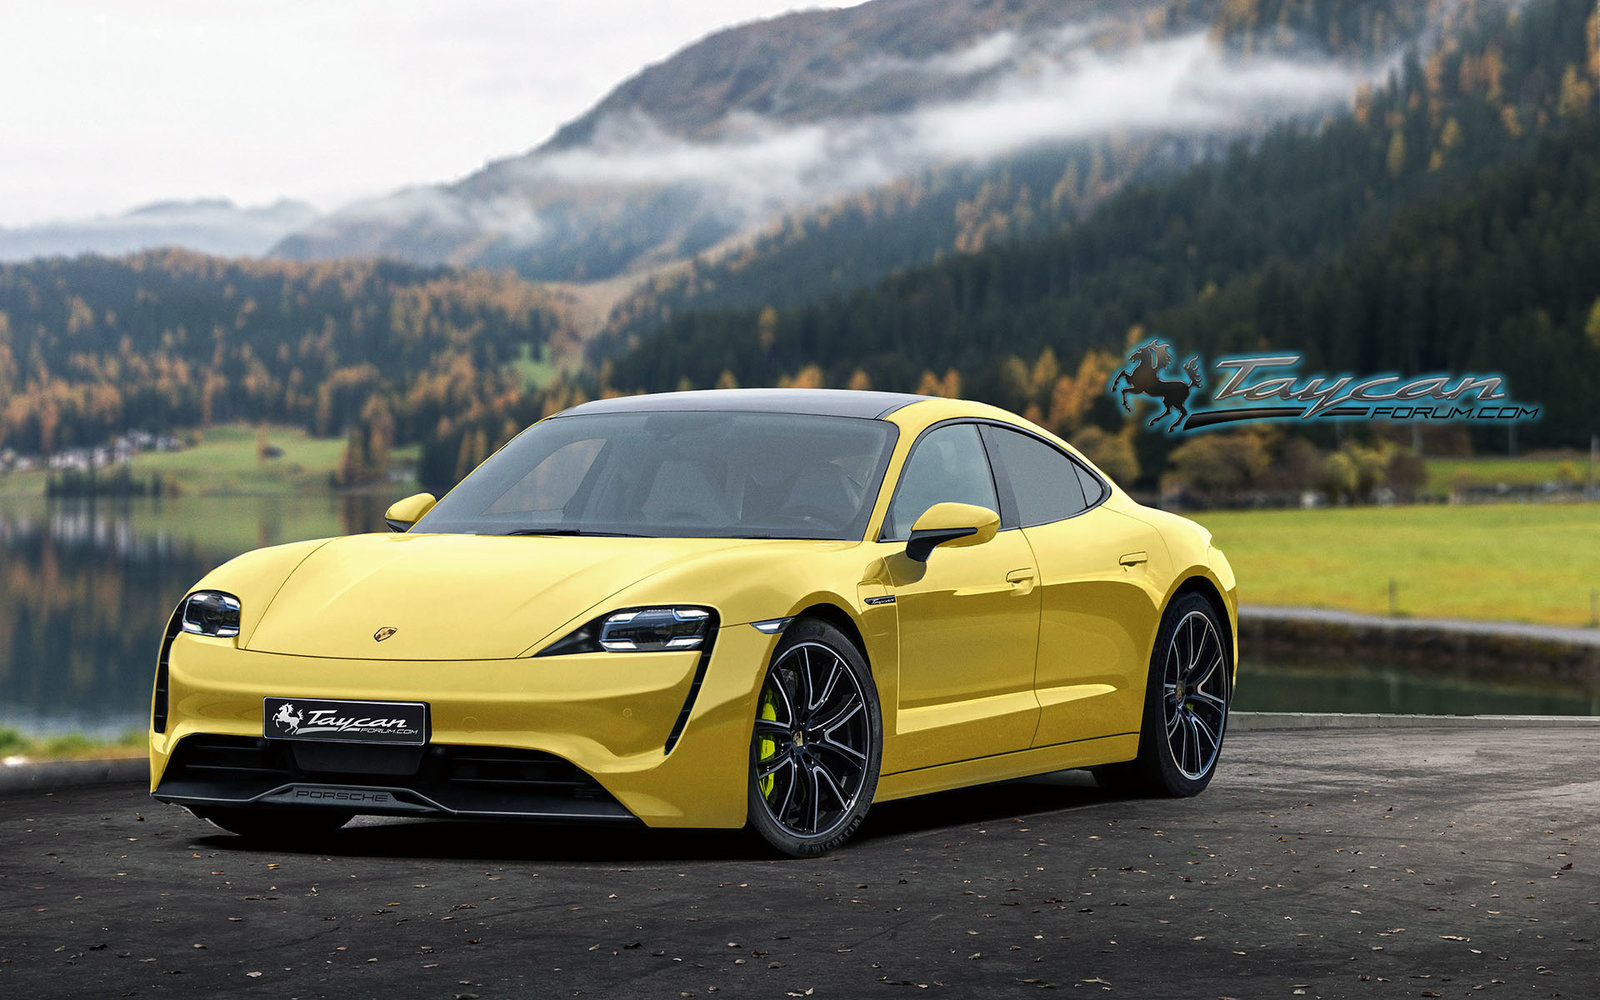 PorscheTaycan_yellow_front.jpg